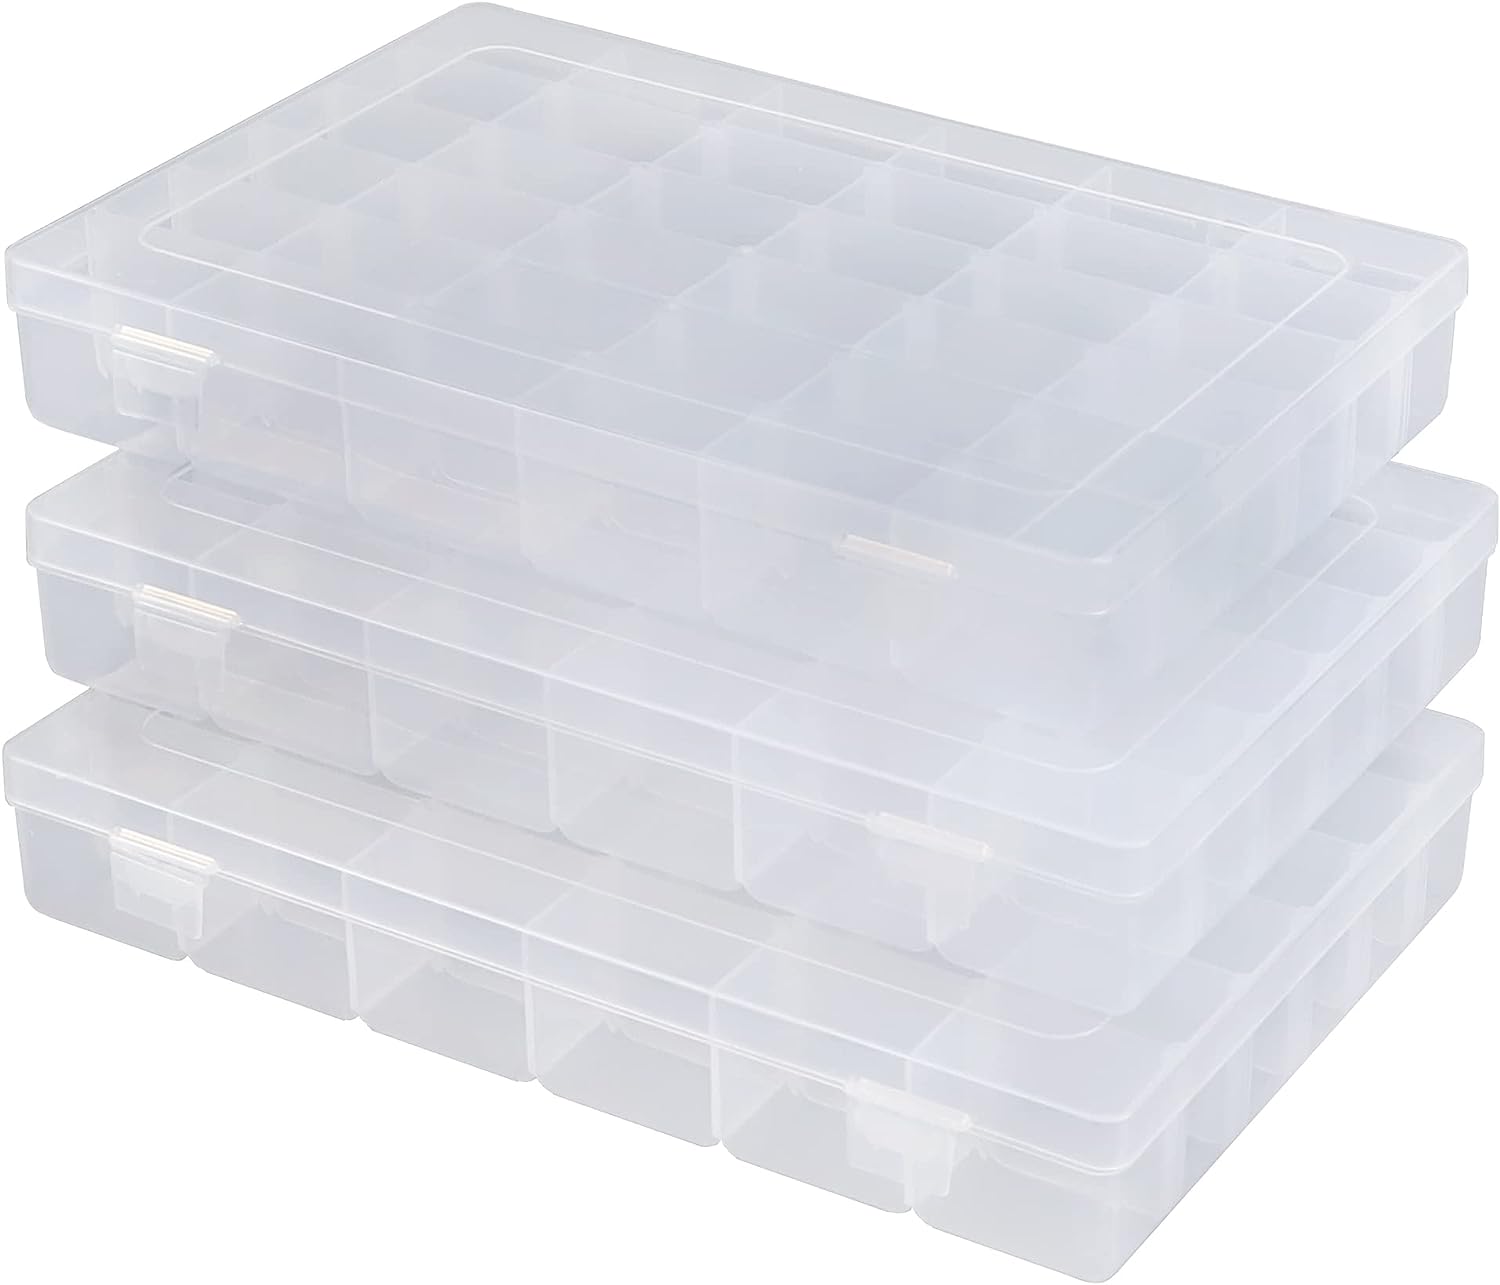 40pcs Bead Organizers in A Clear Organzier Box, 2 Sets Clear Plastic  Diamond